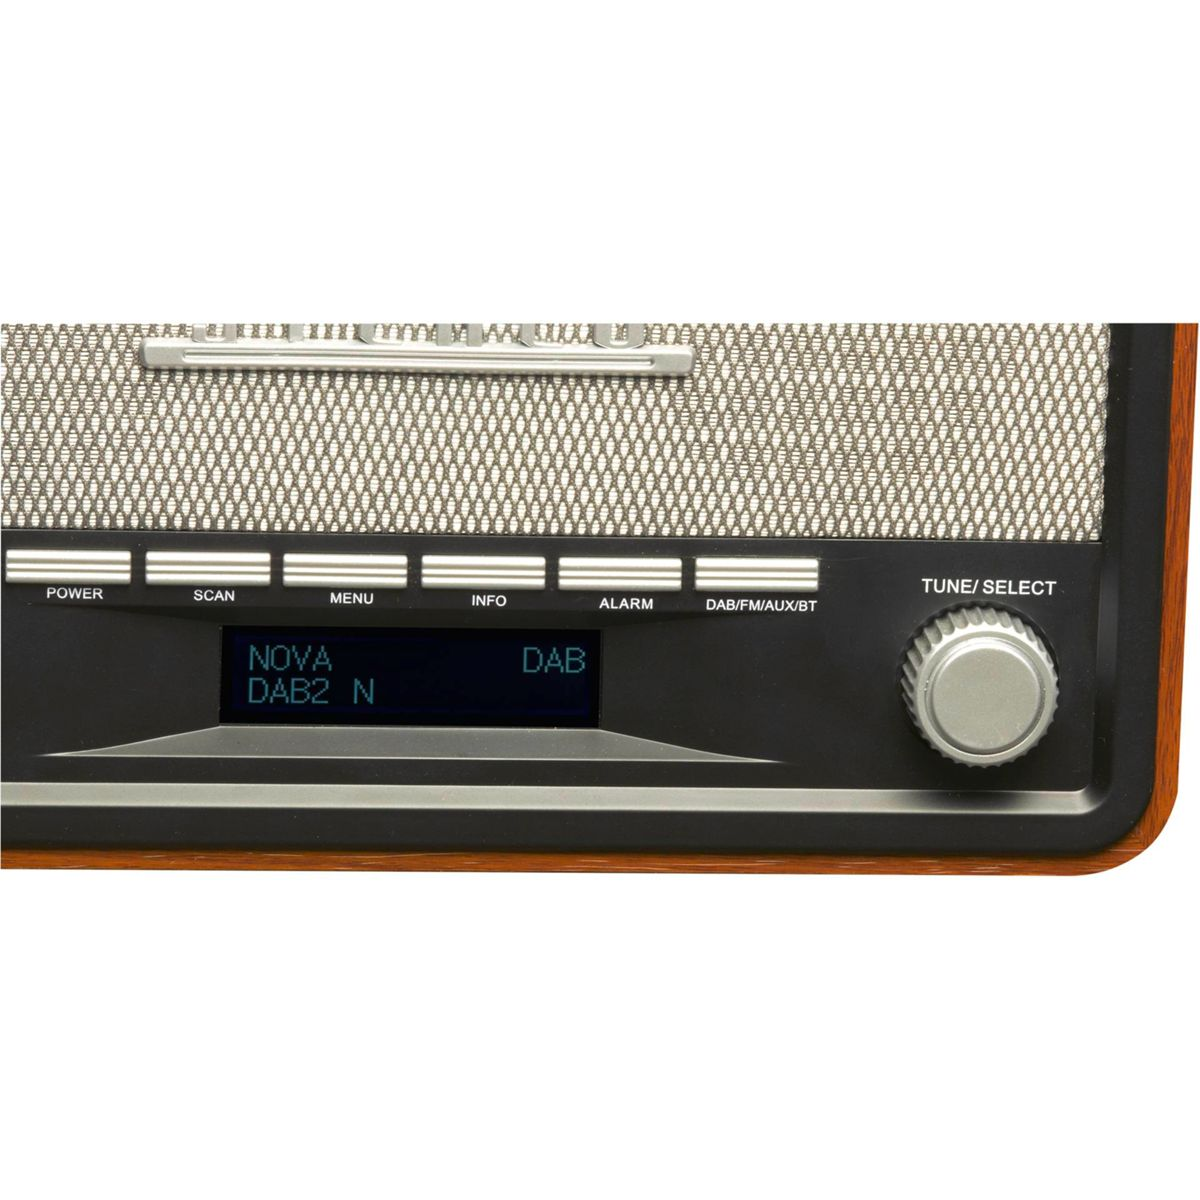 DENVER DAB-18 Dunkelbraun Radio, braun schwarz / Bluetooth, DAB